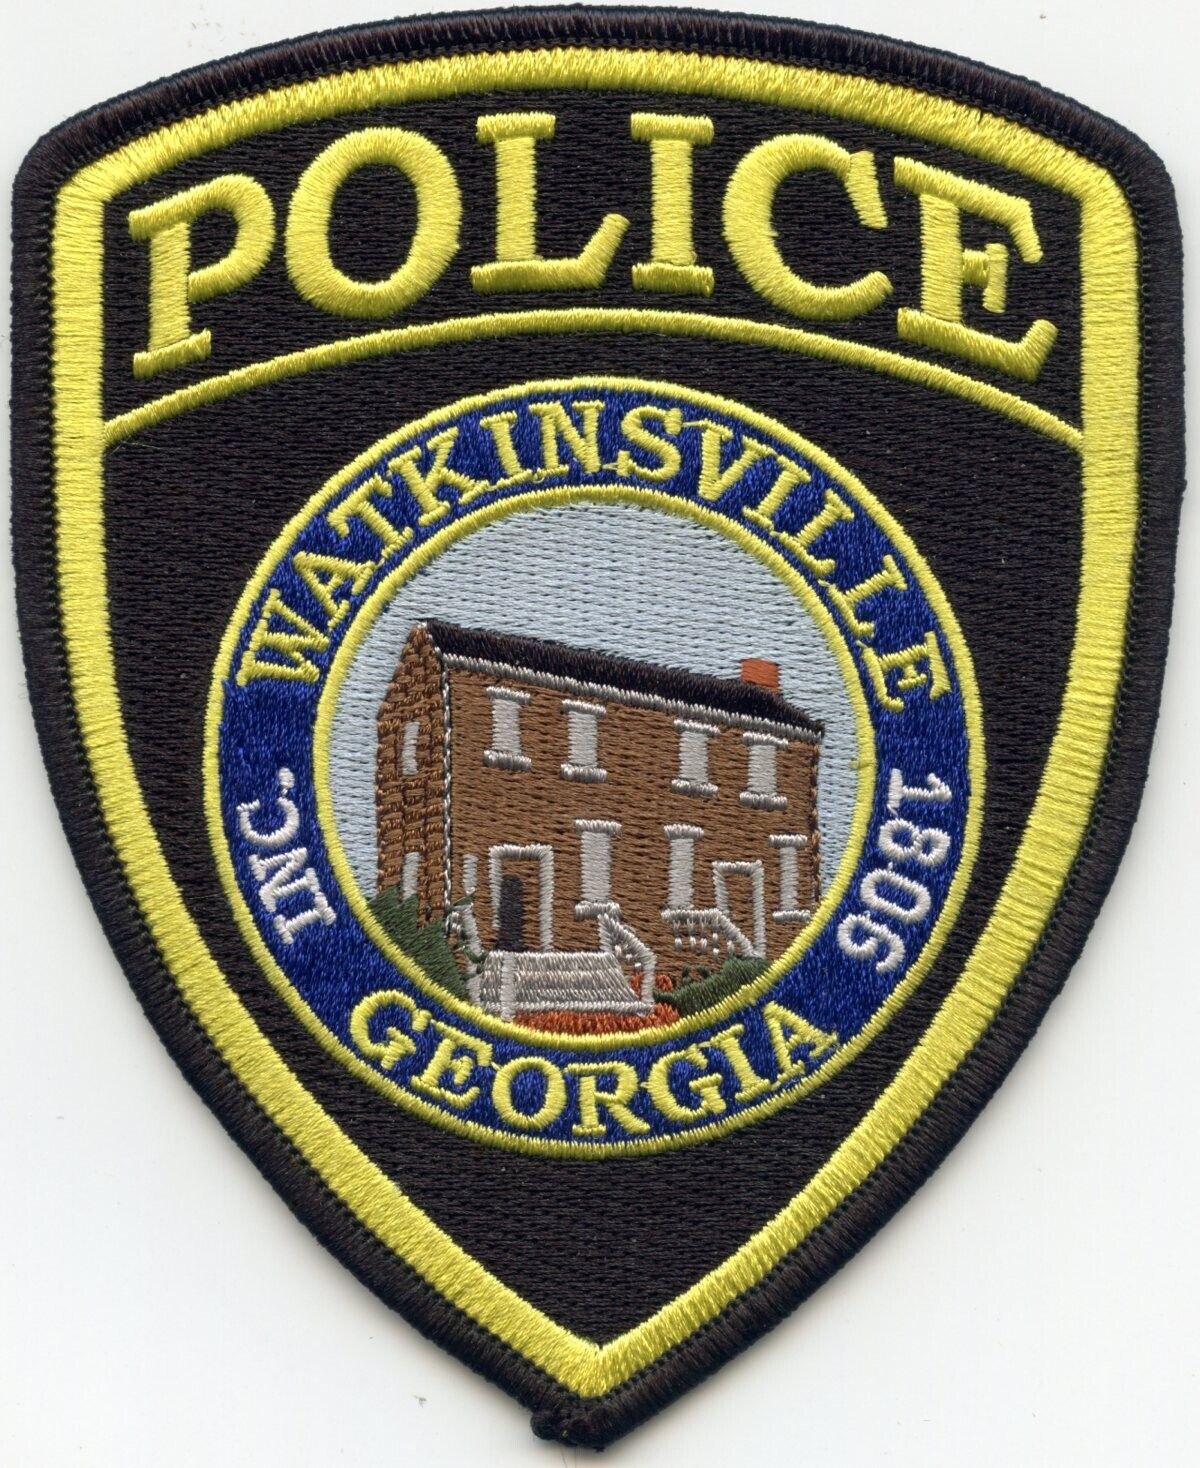 WATKINSVILLE GEORGIA POLICE PATCH